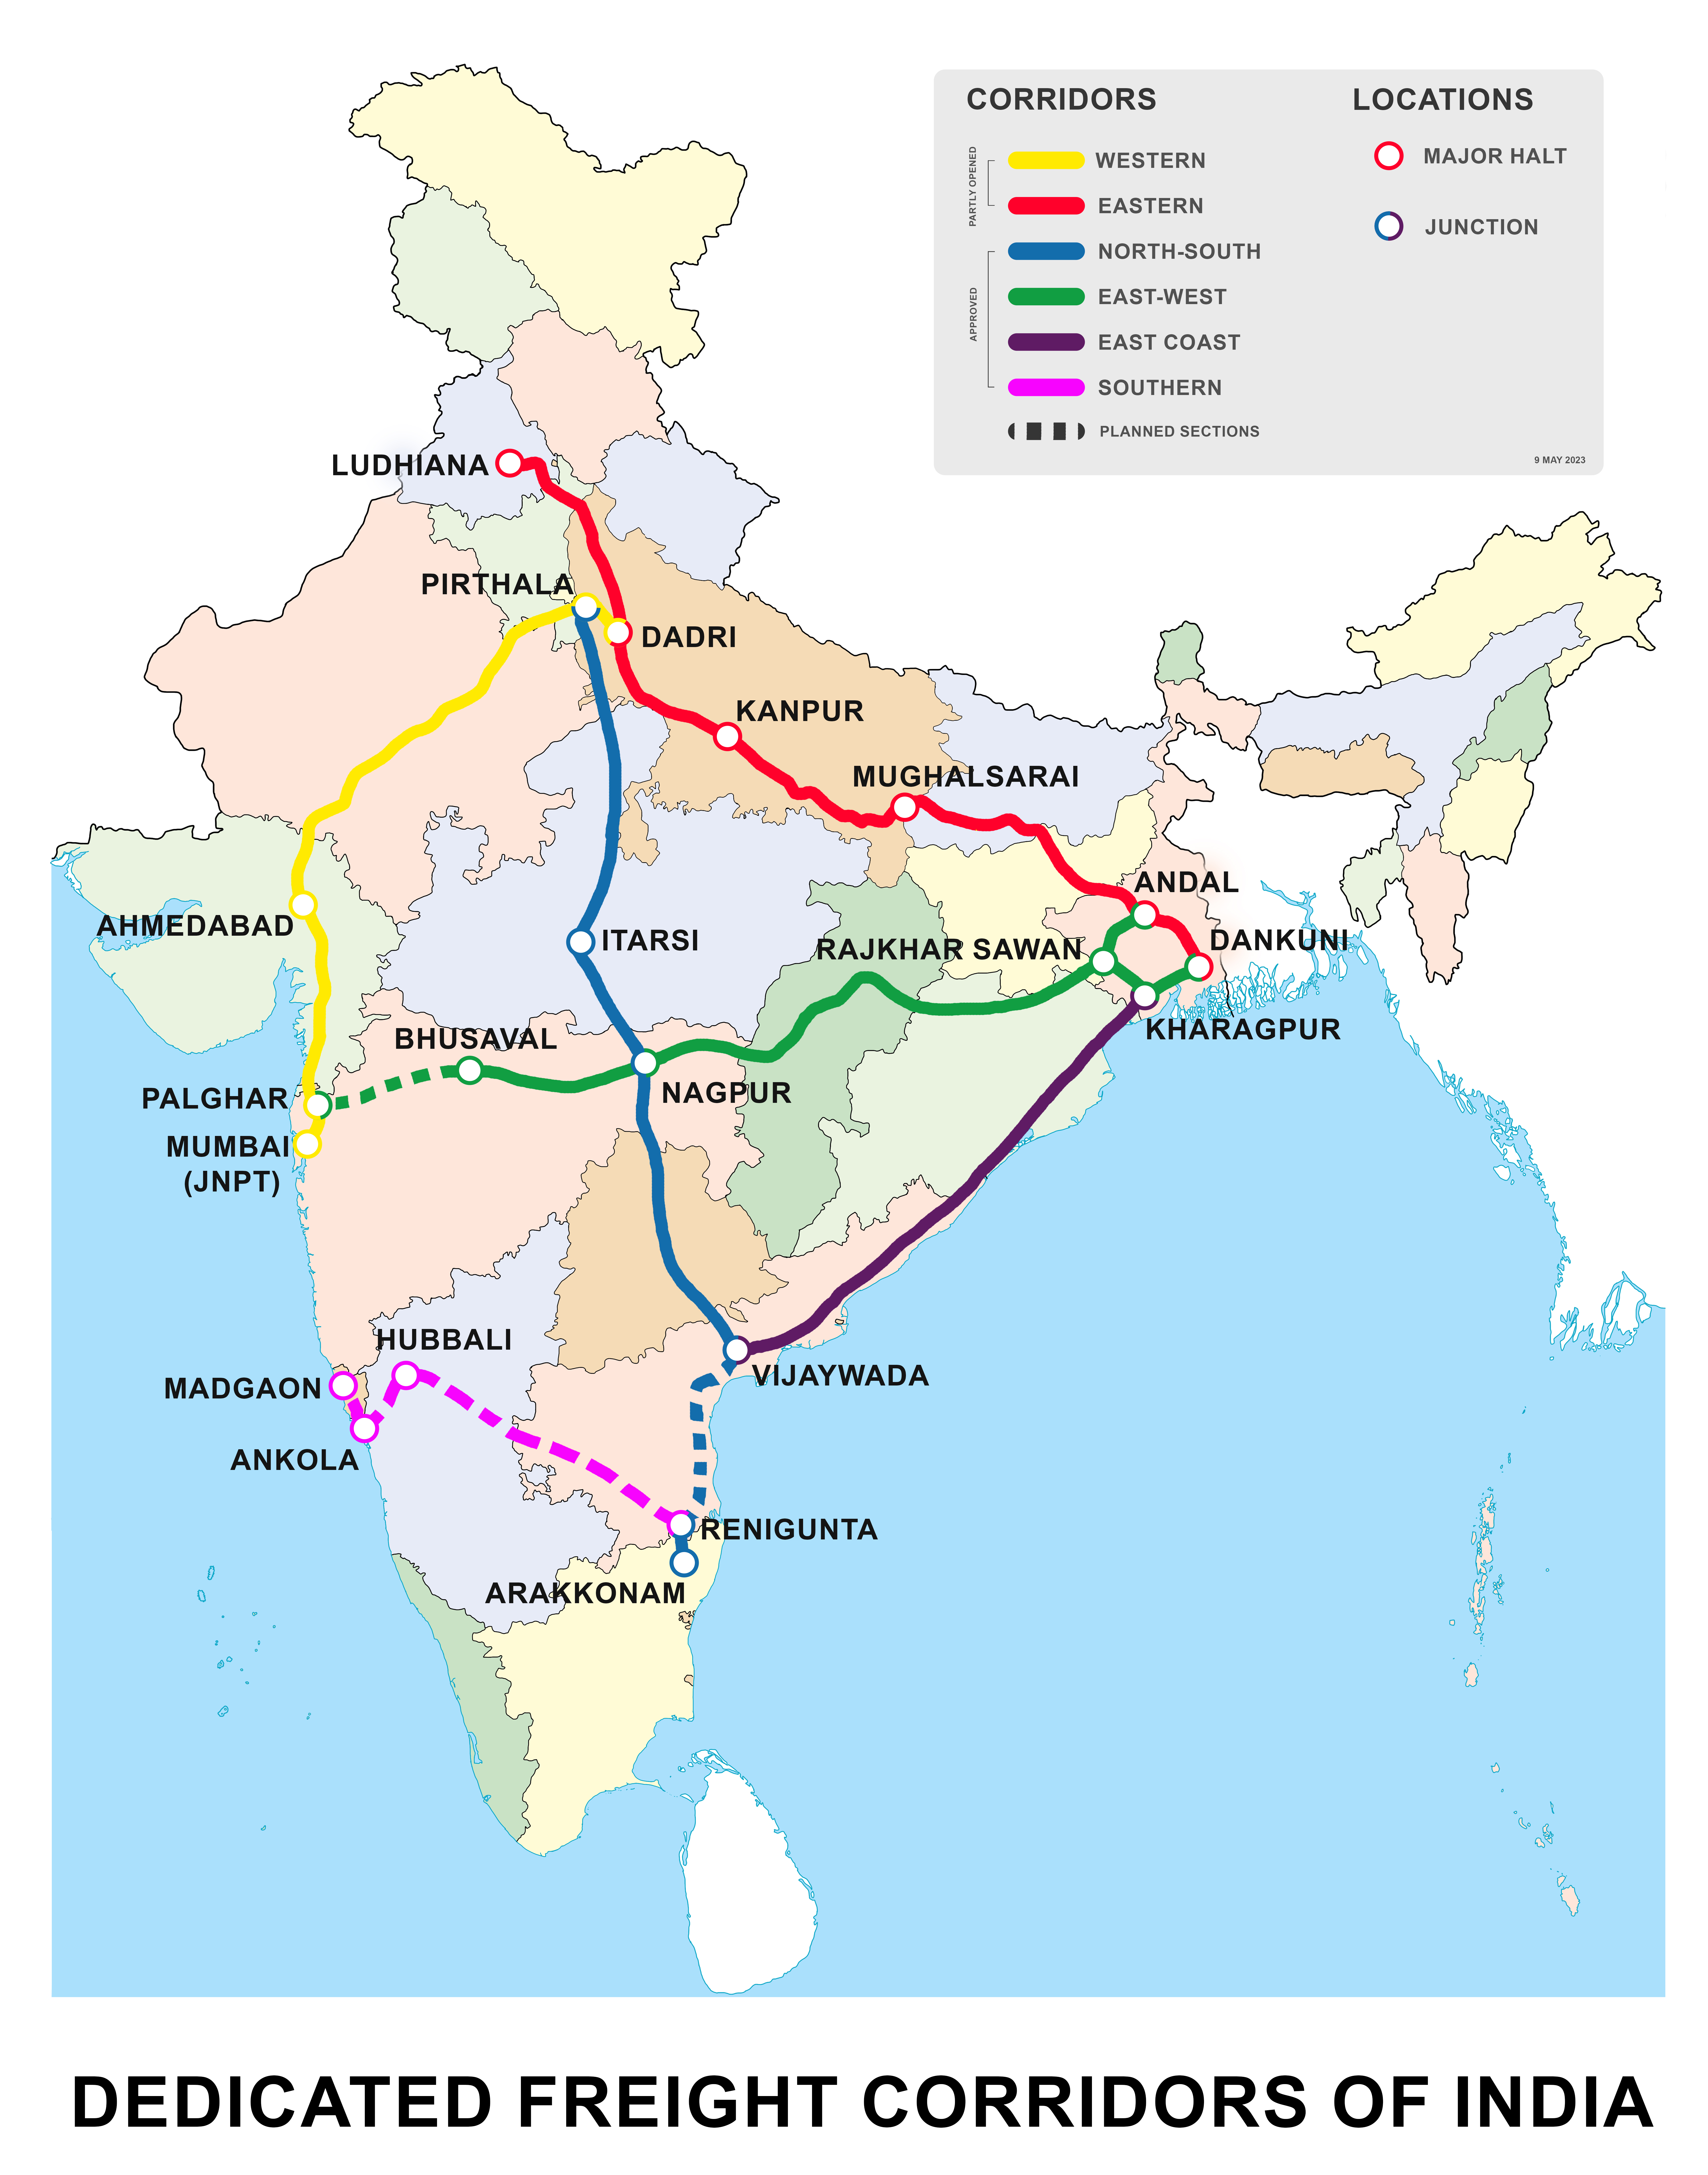 Map_of_dedicated_freight_corridors_of_India.jpg